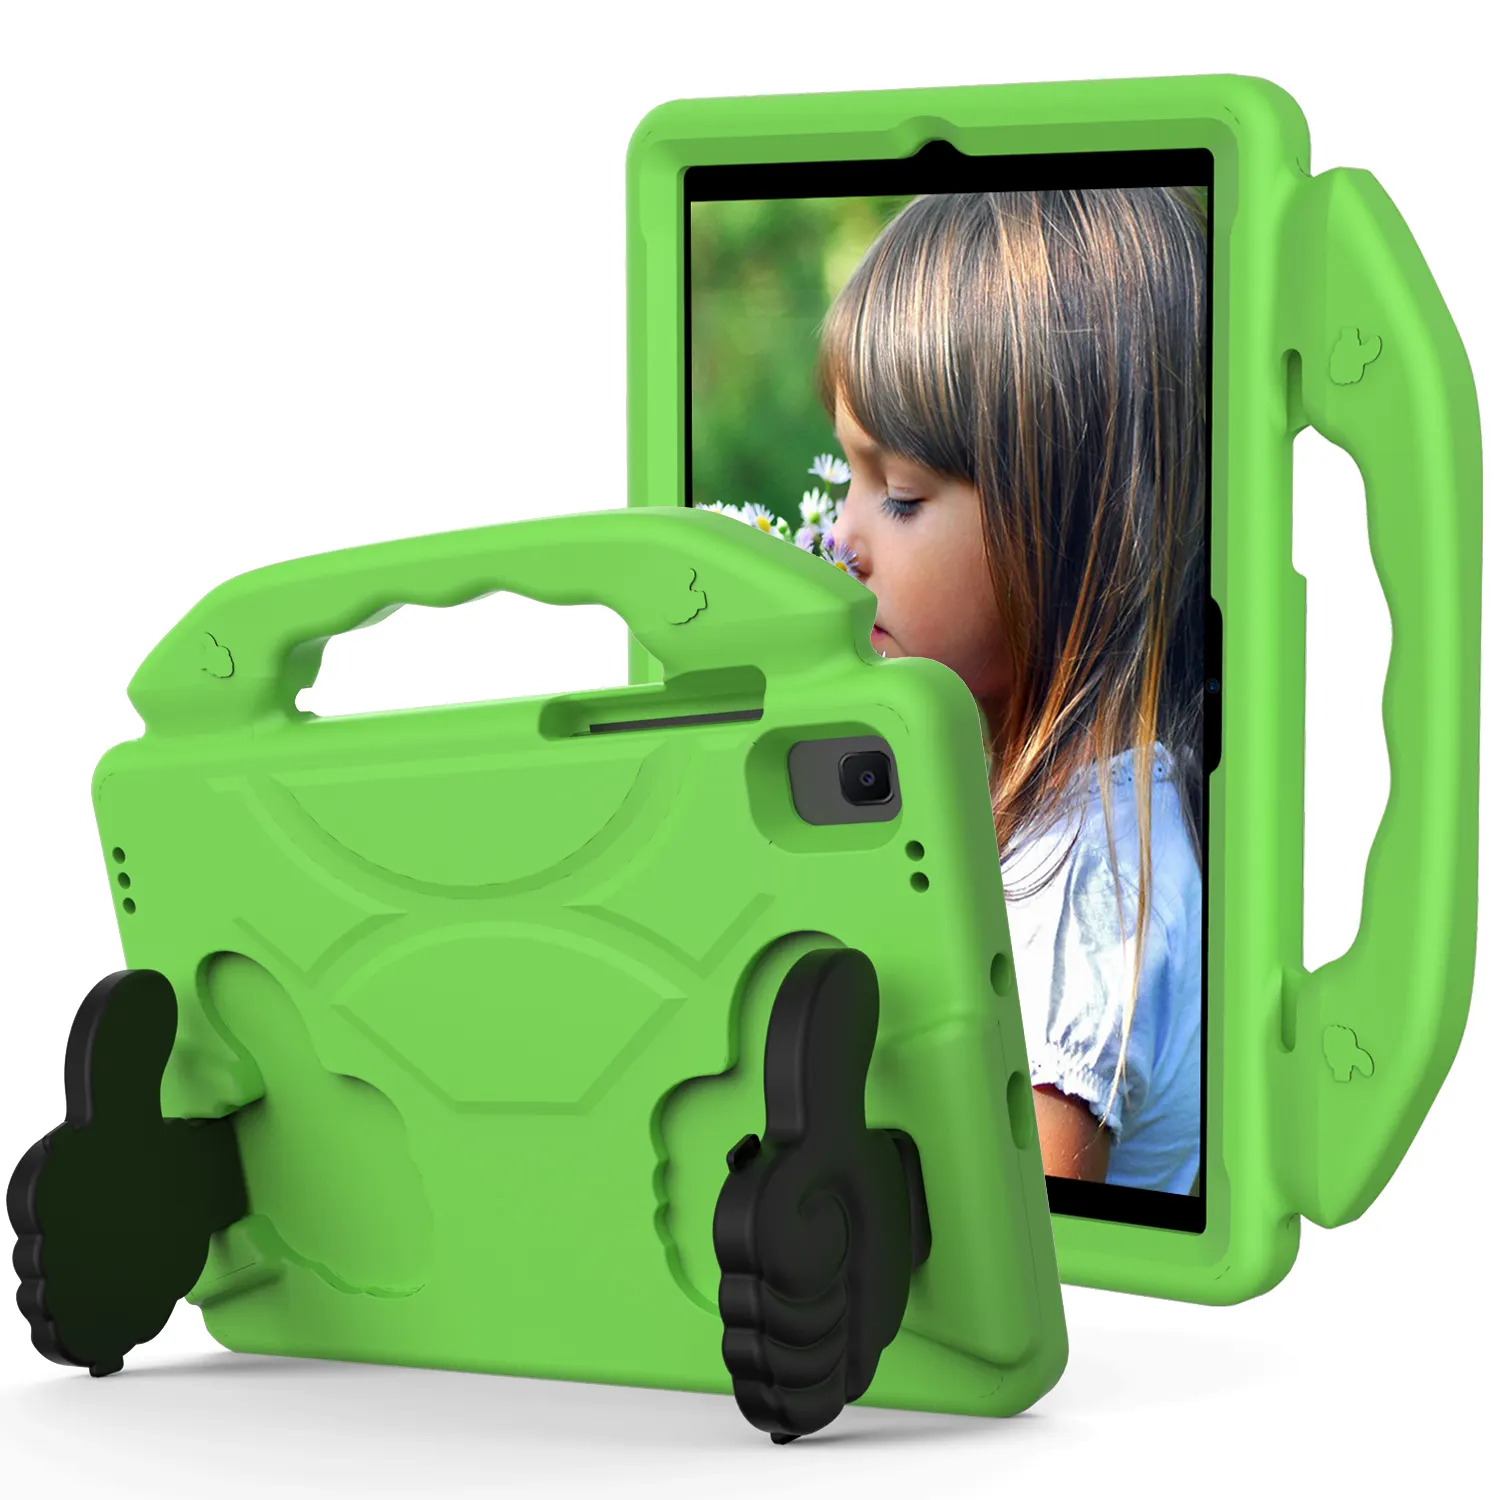 Kids Safe EVA Handle Tablet Case For Amazon Kindle fire hd7 2015 2017 2019